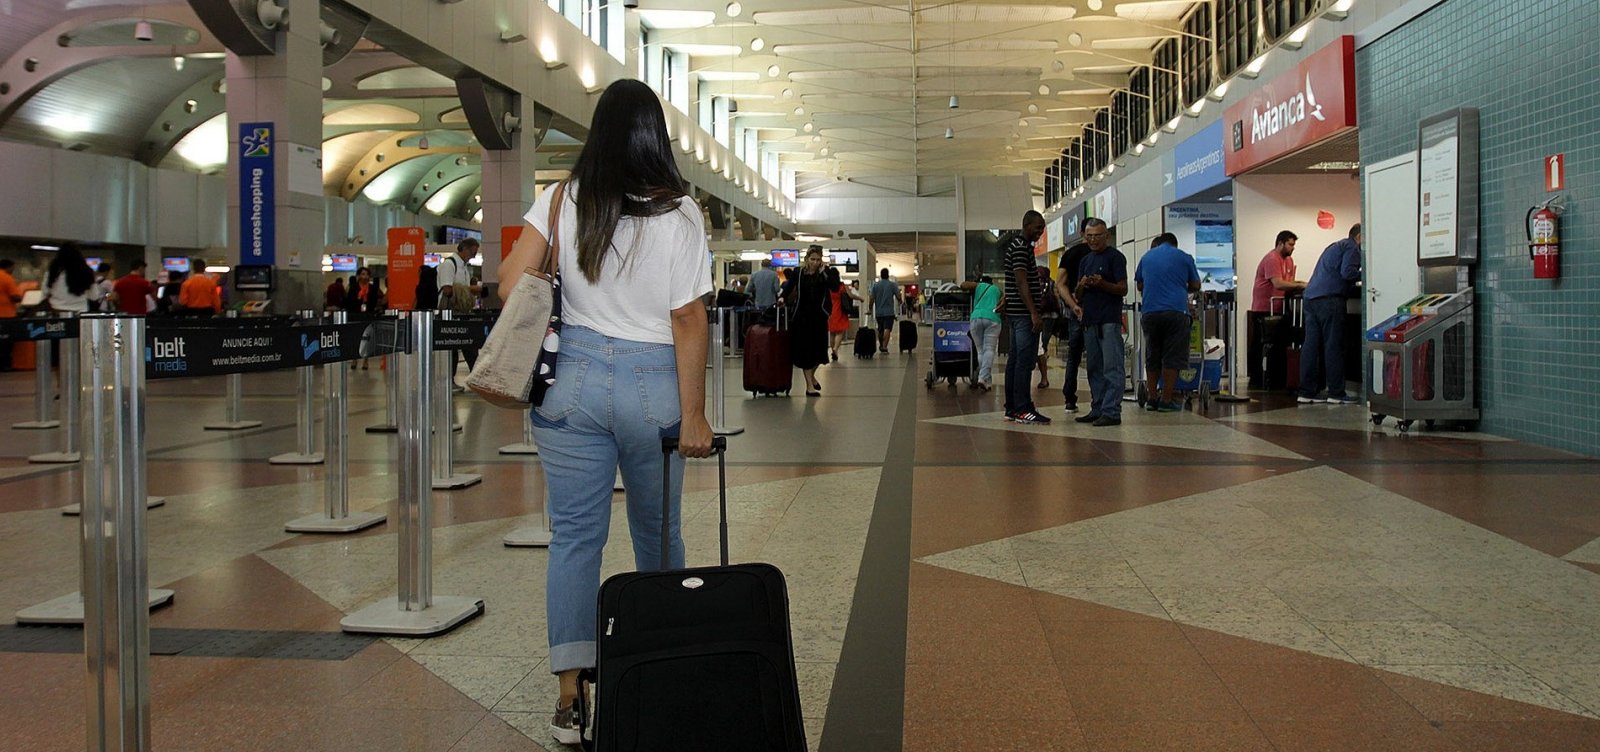 Passageiros reclamam de maus tratos na Receita Federal do Aeroporto